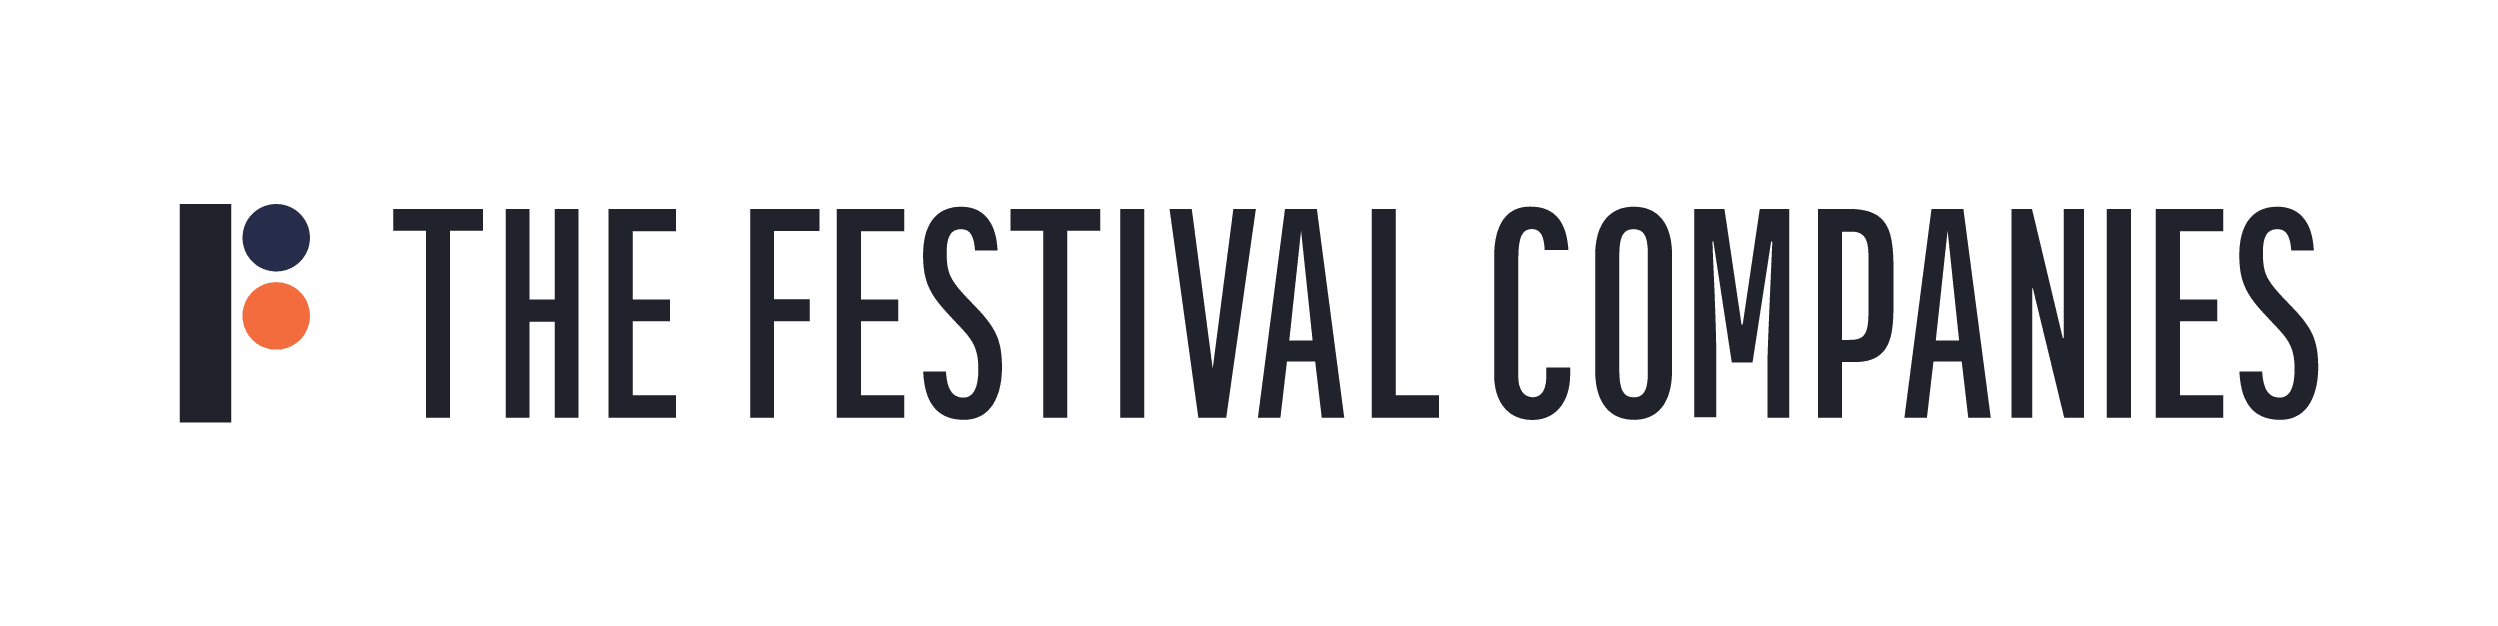 Festival Companies Logo